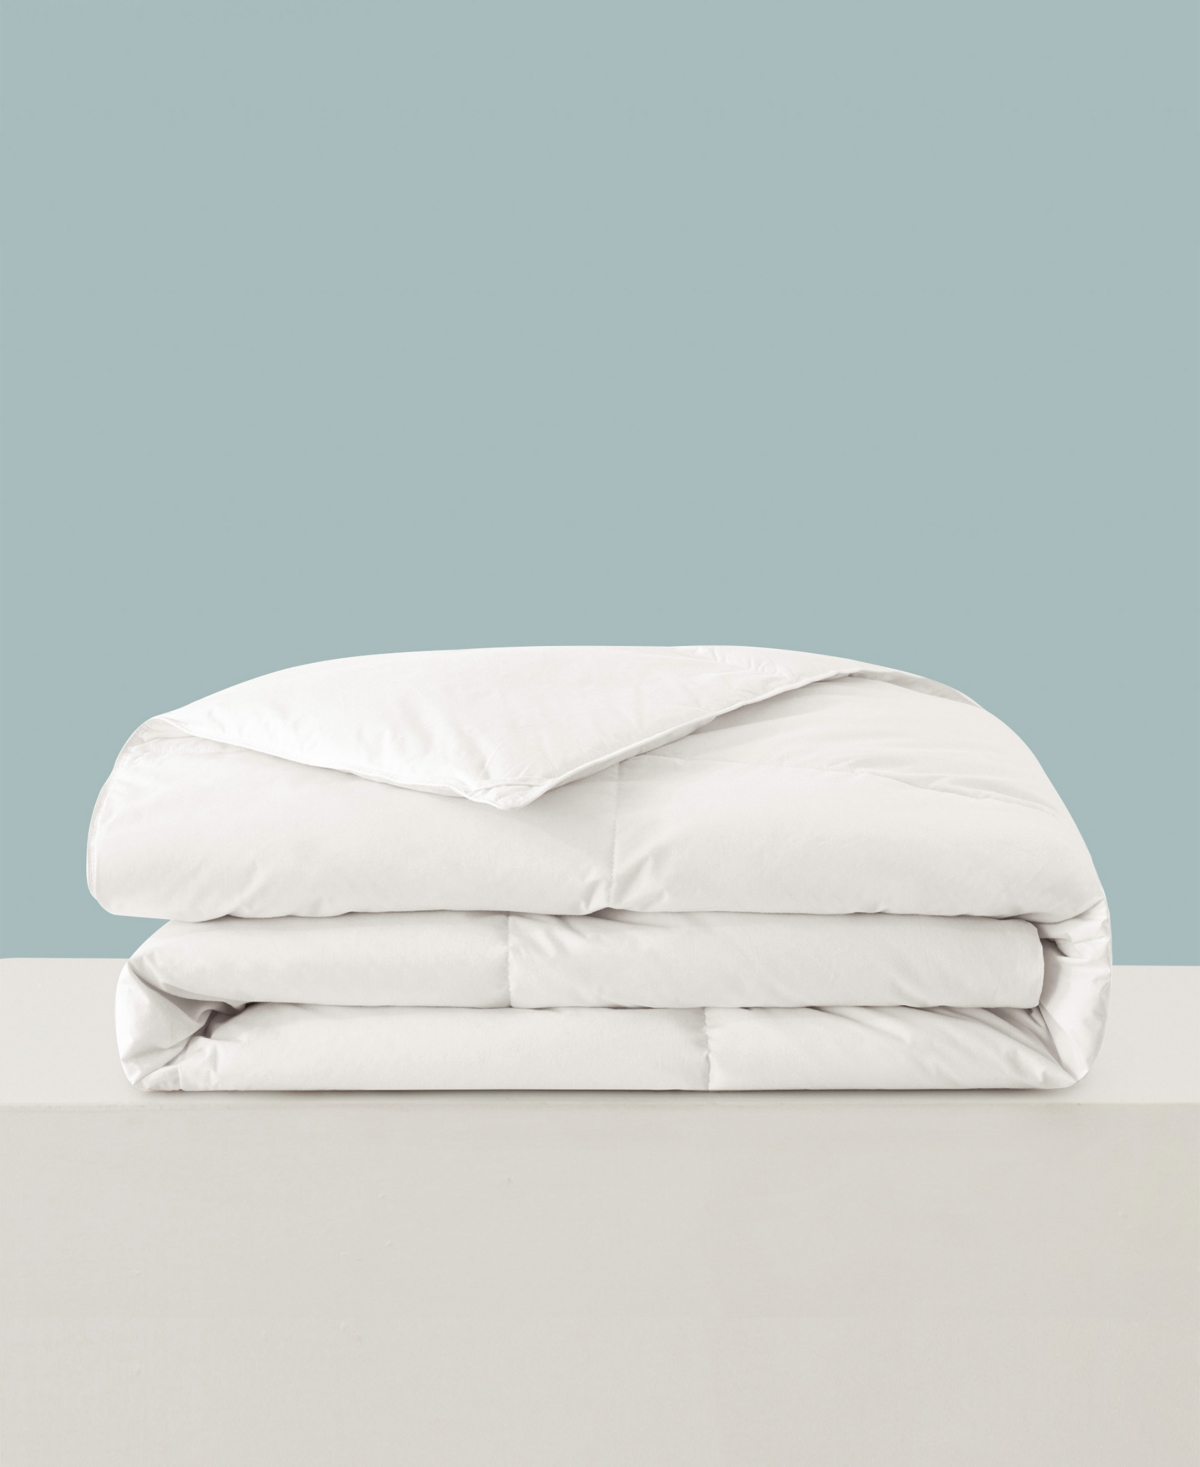 Unikome Light Warmth Ultra Soft White Goose Down Feather Fiber Comforter, Full/queen